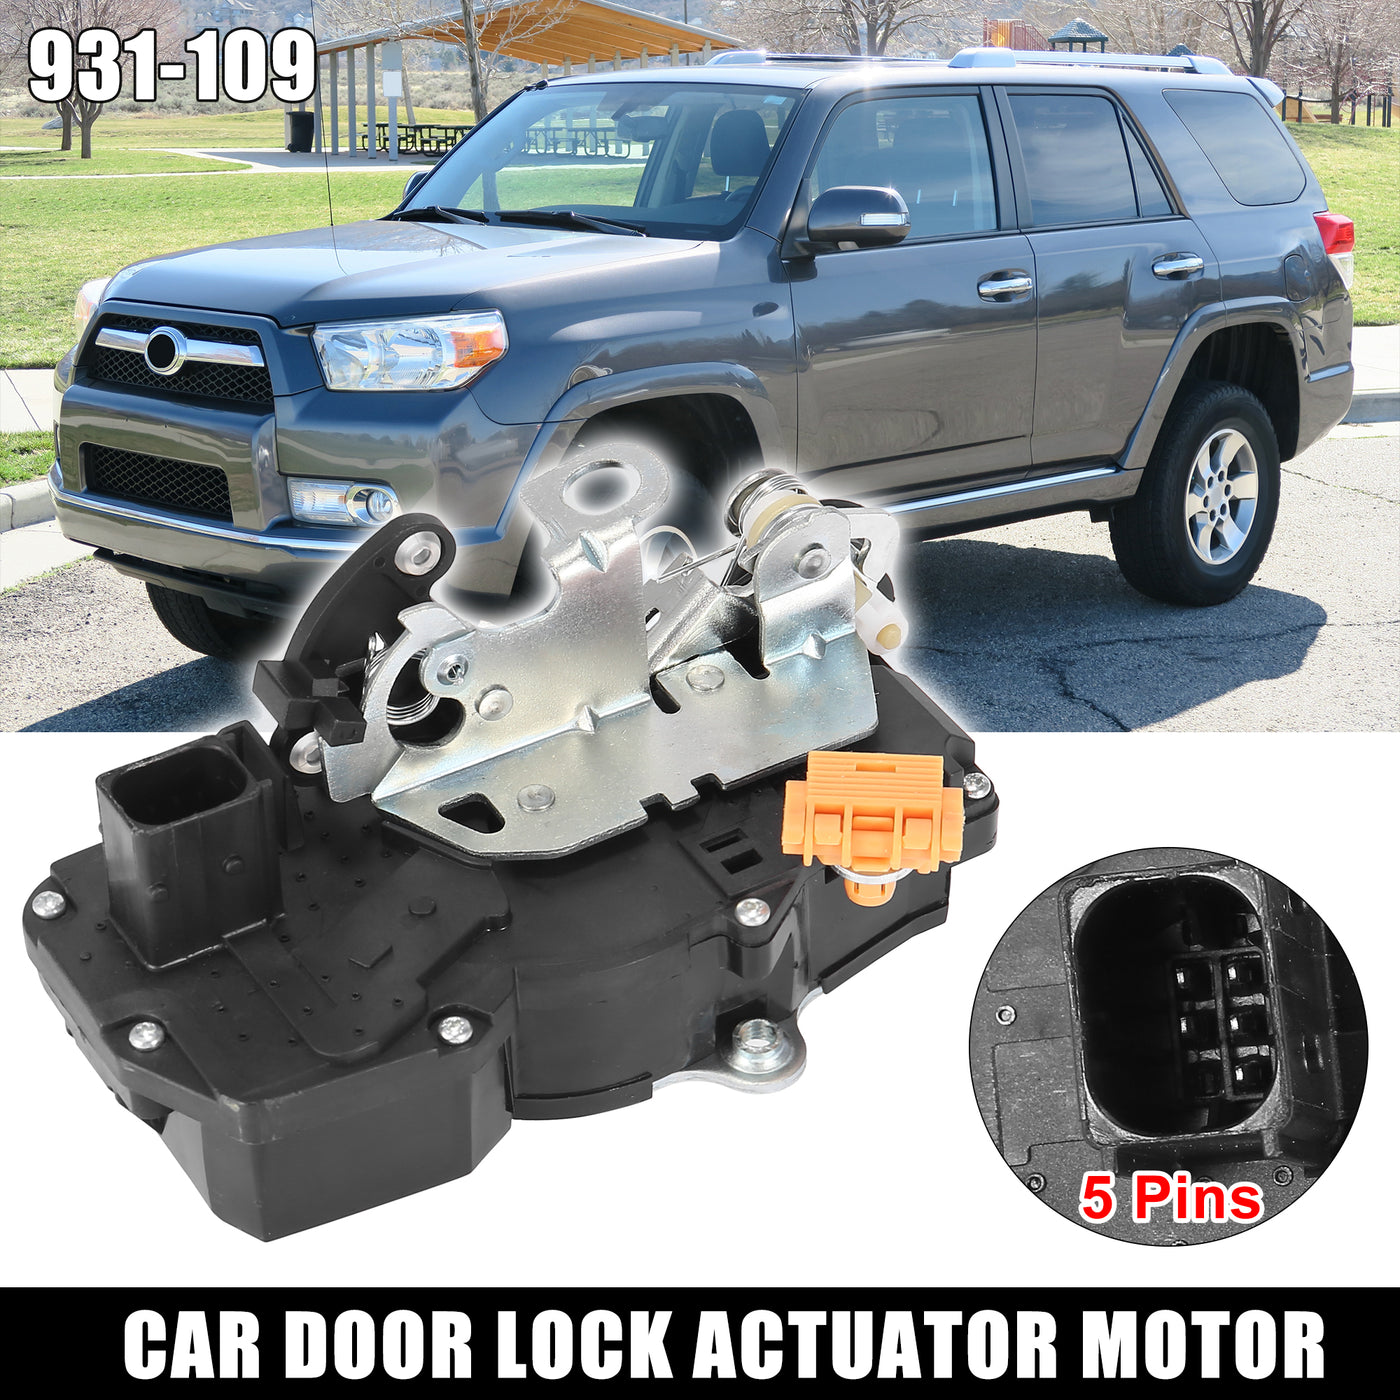 X AUTOHAUX Power Door Lock Actuator Motor Rear Right Side 931-109 for Cadillac Escalade 2007-2014 for Chevrolet Suburban 2500 2007-2009